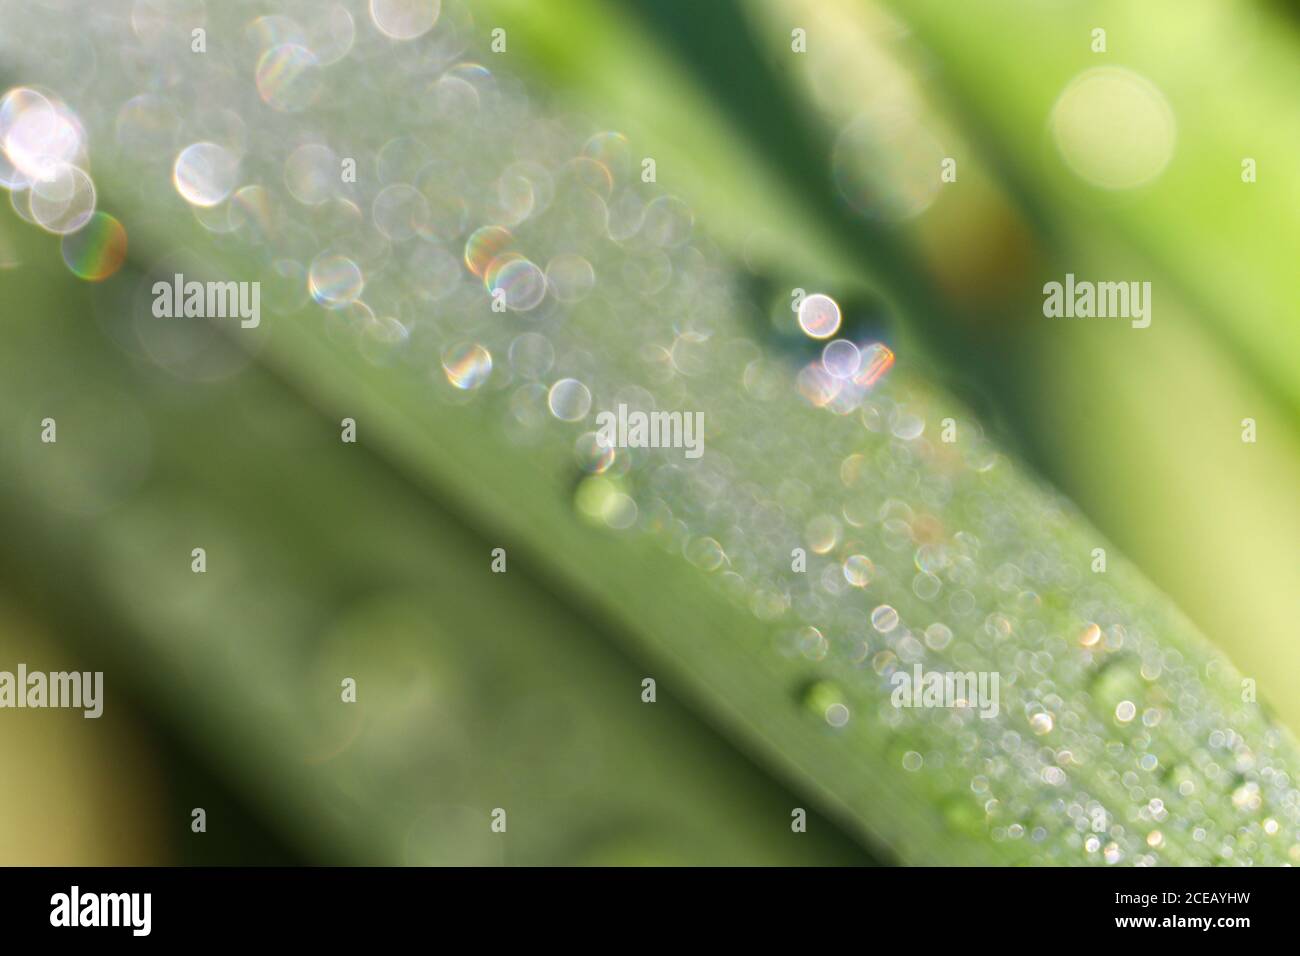 drops of blurry morning dew on lemongrass leaves Stock Photo